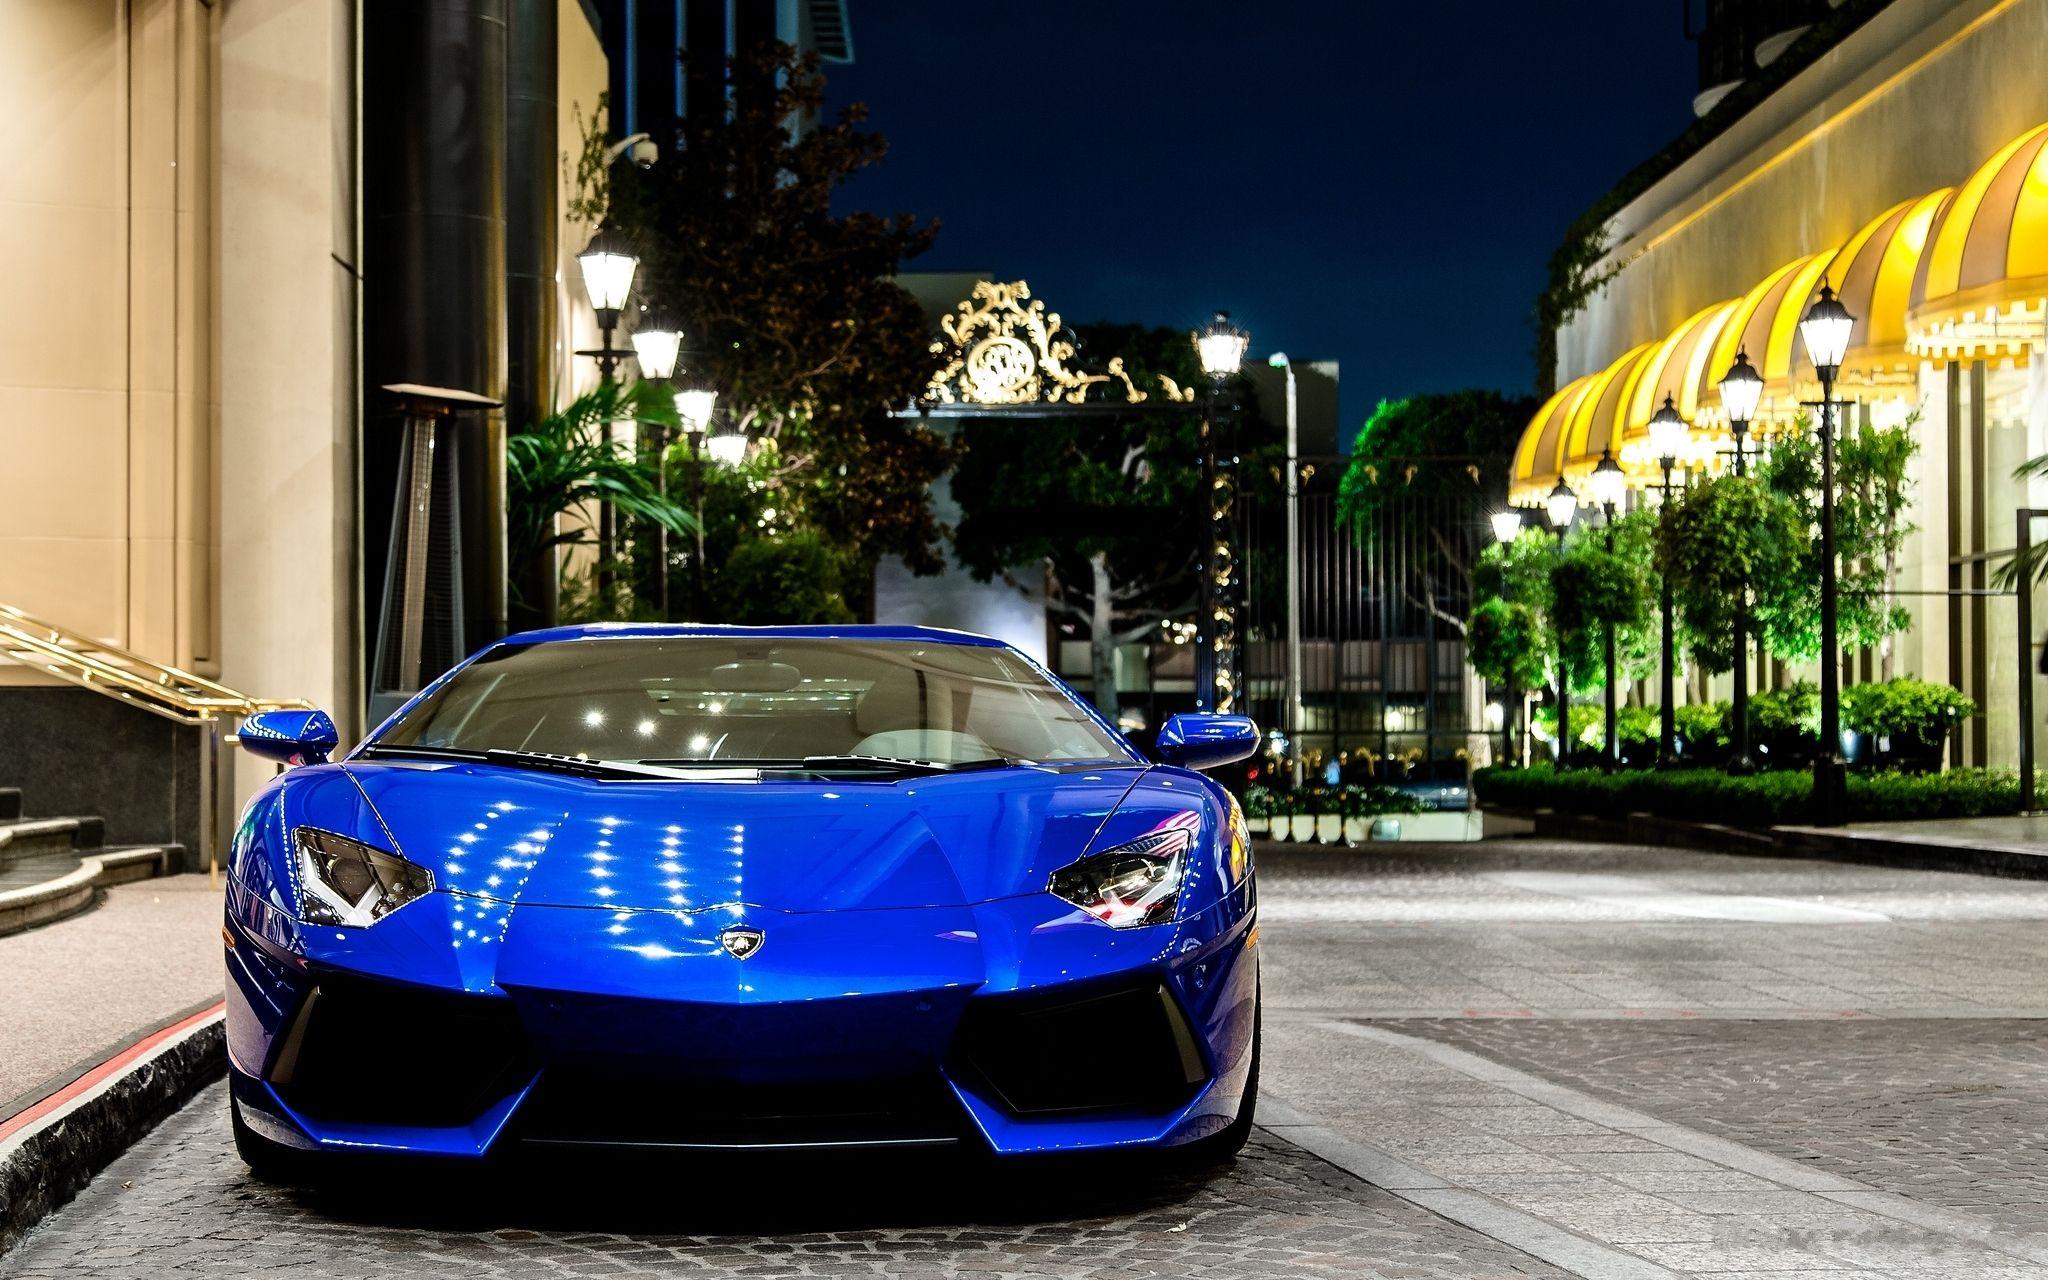 Wallpaper Lamborghini Car Aventador Blue Cars A On High Quality Of